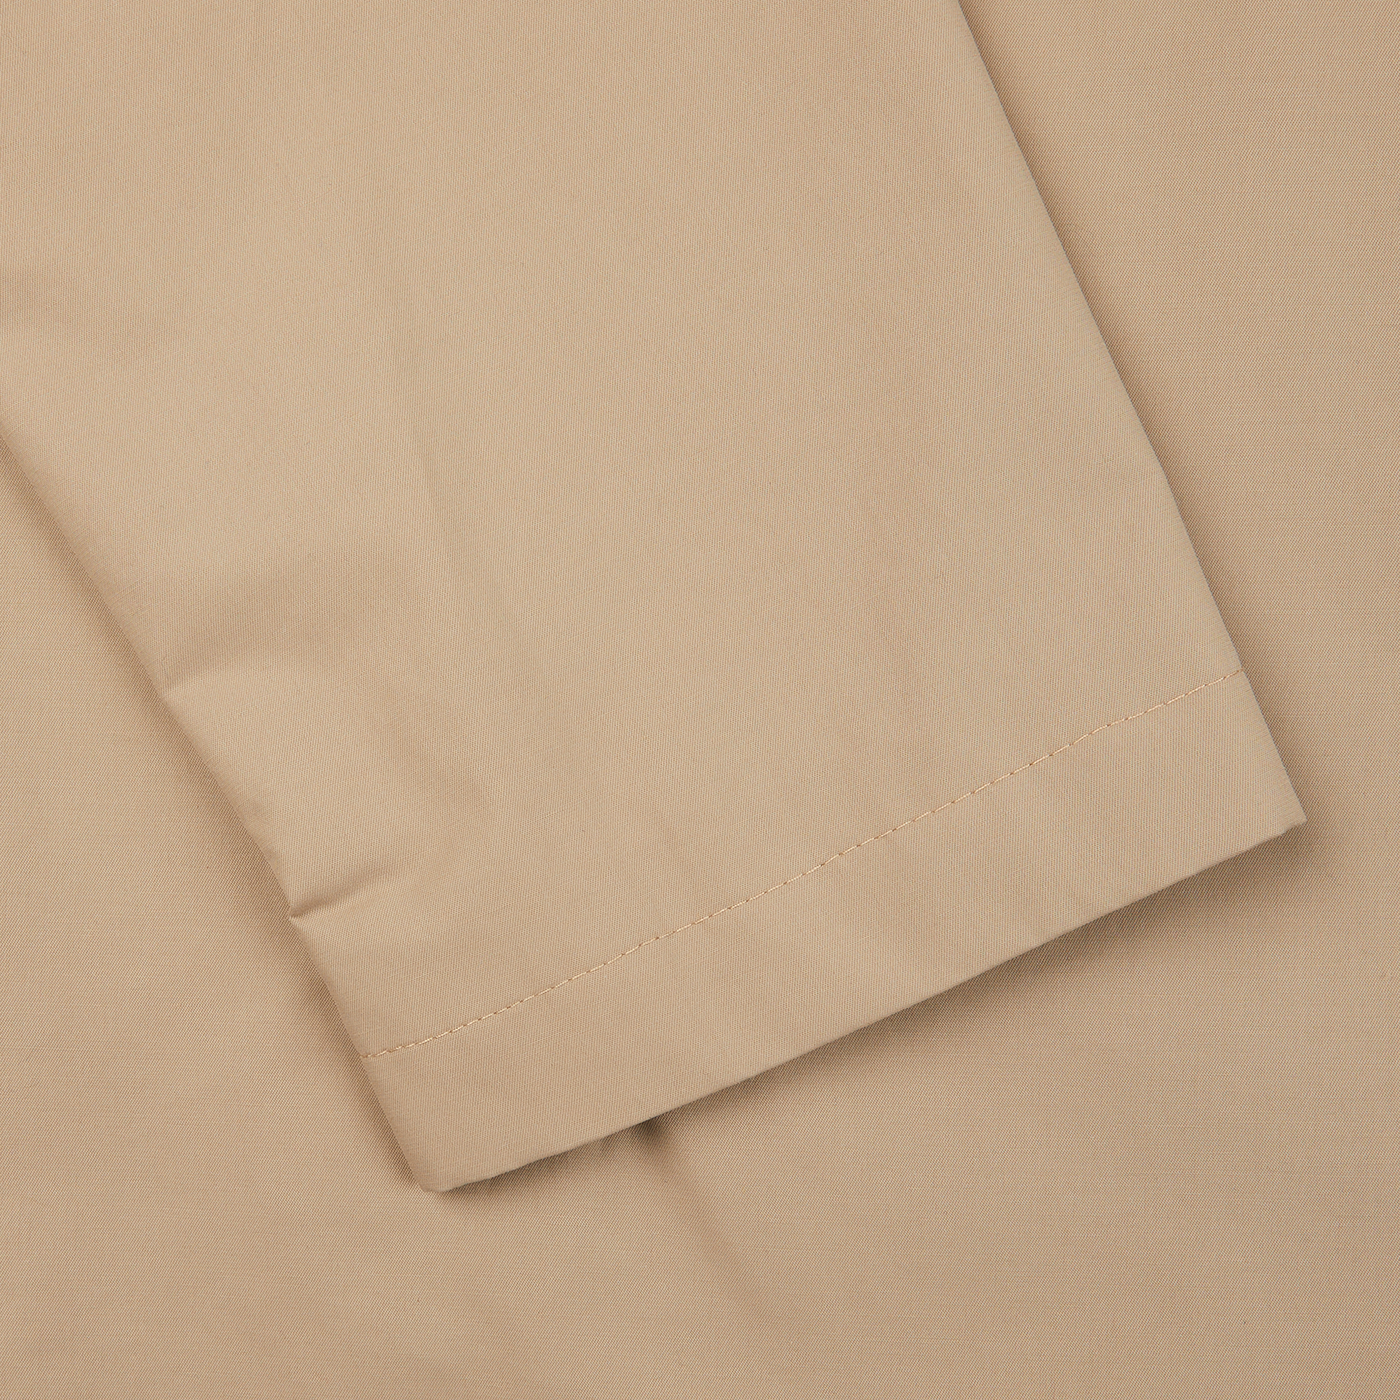 A close-up image of a Tagliatore Khaki Beige Cotton Nylon Trench Coat.